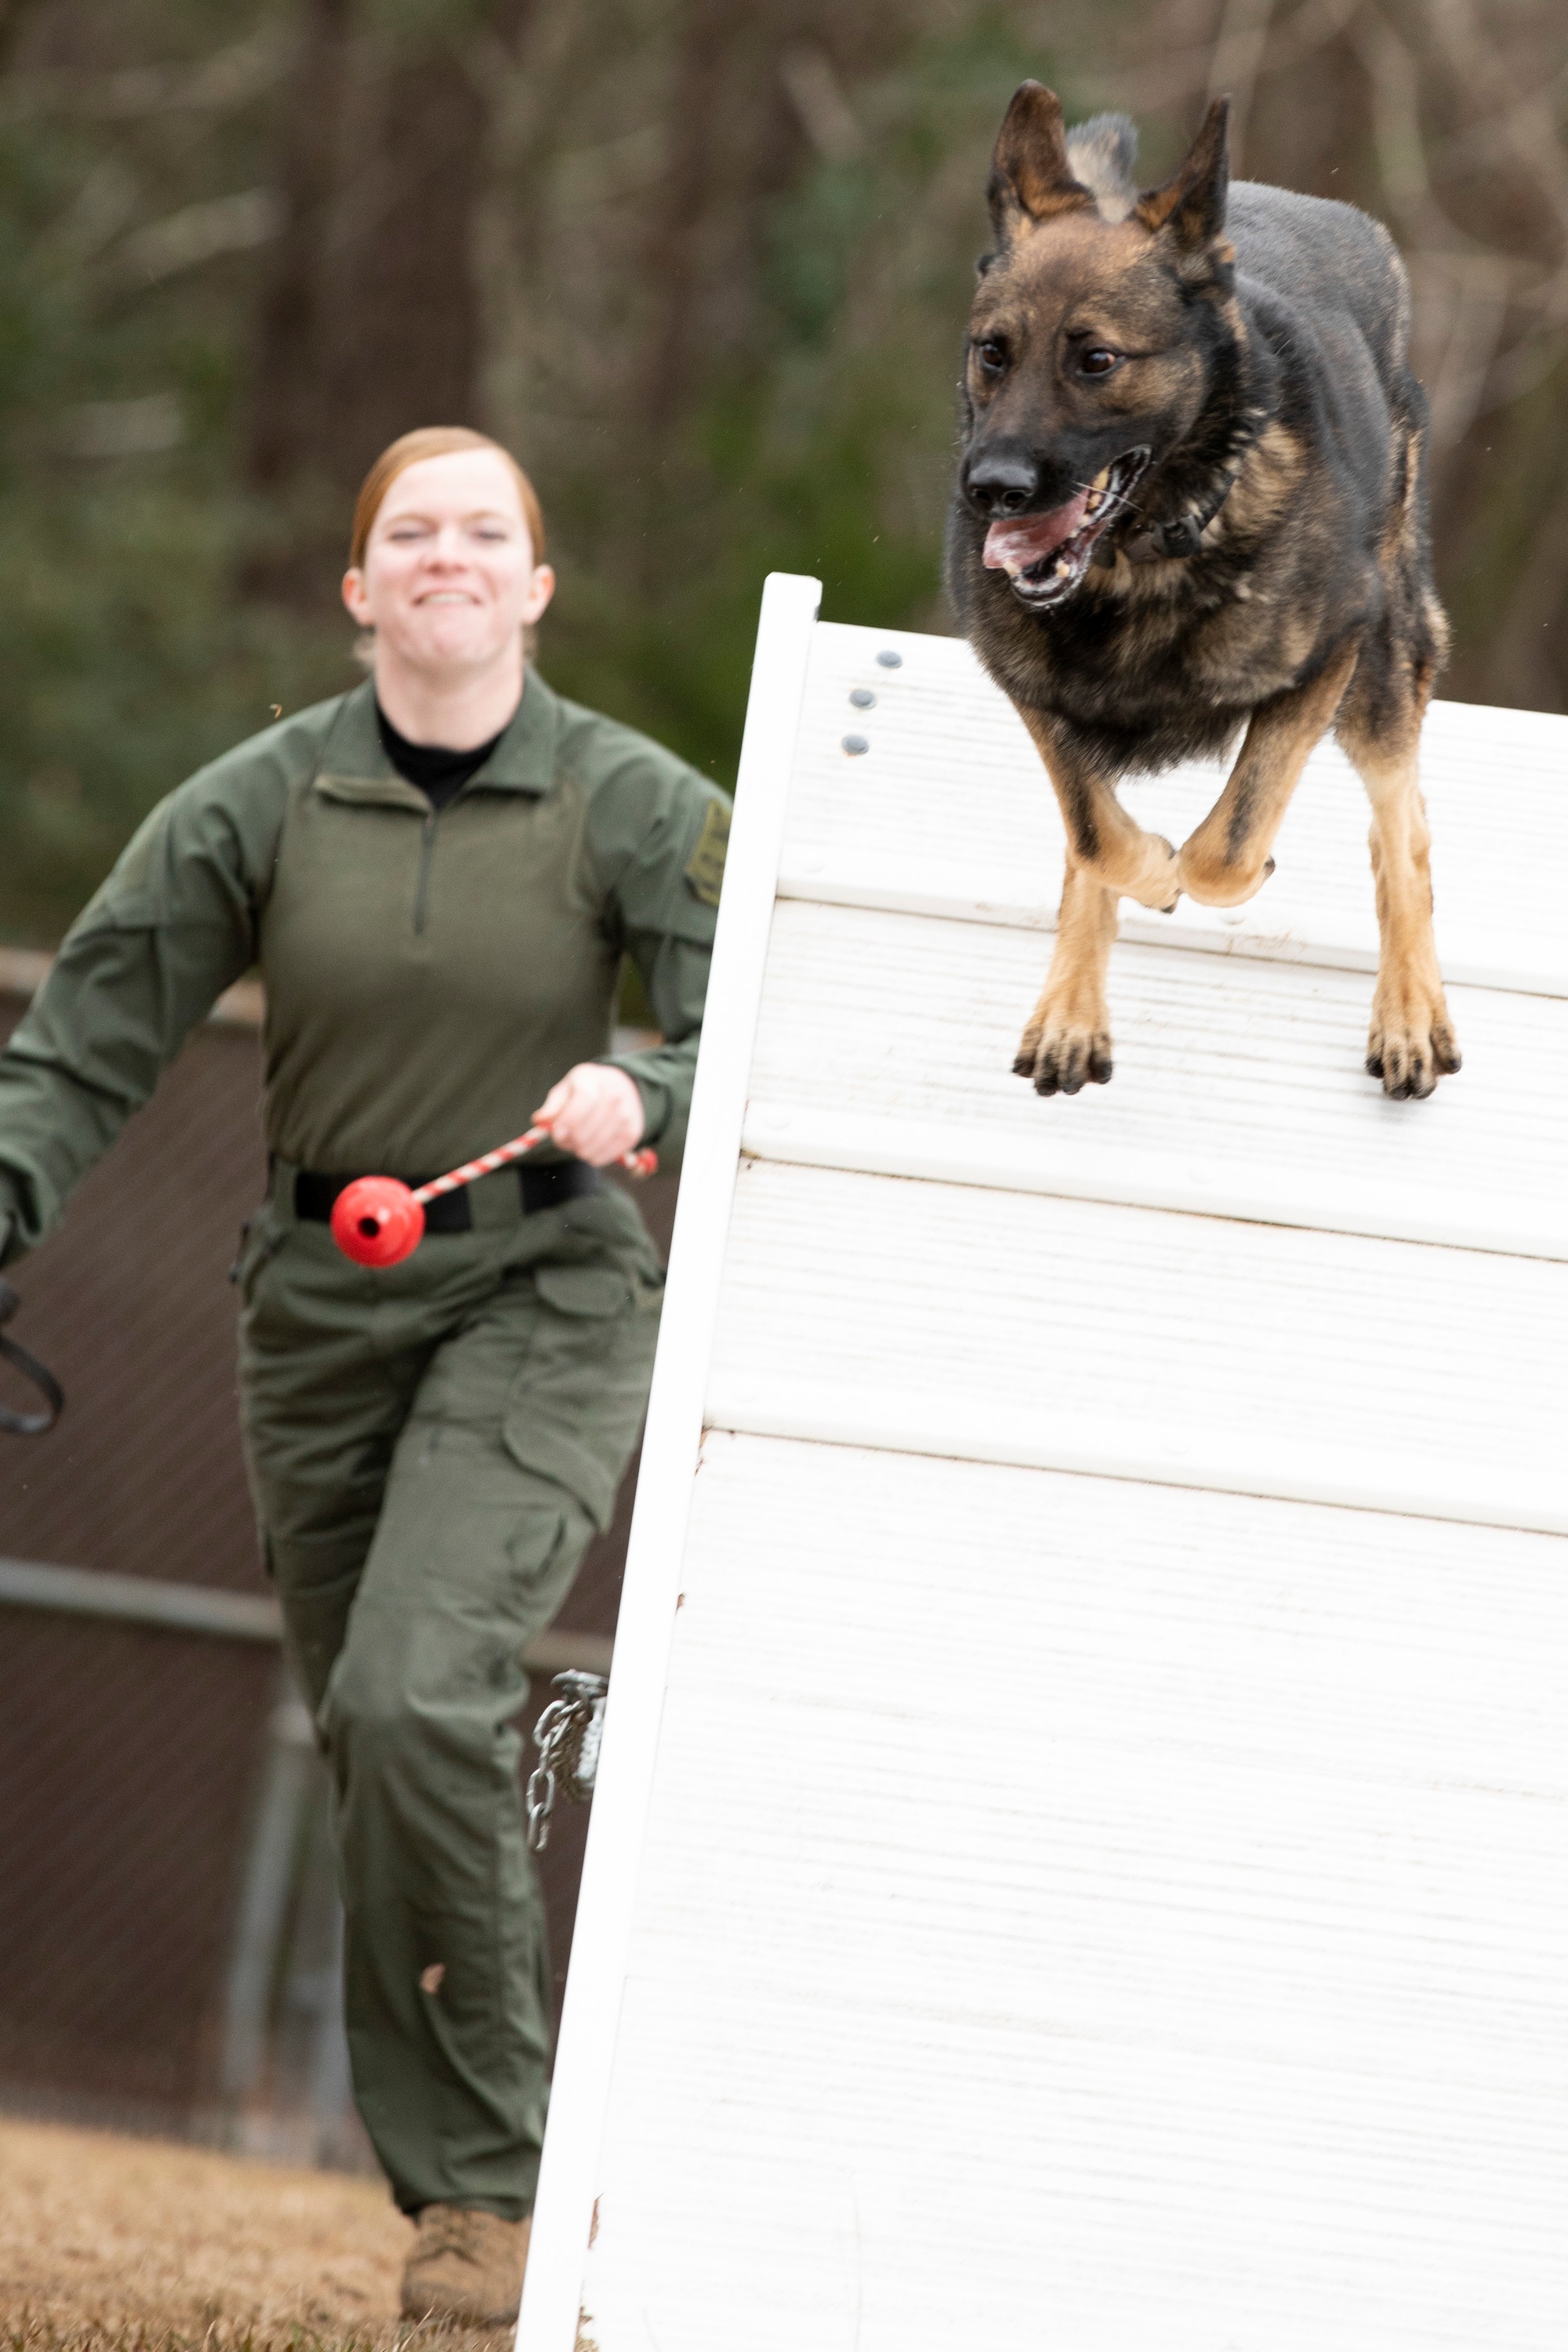 FileTraining Unleashed Marine dog handler shares bond with canine  131015MNP085006jpg  Wikimedia Commons